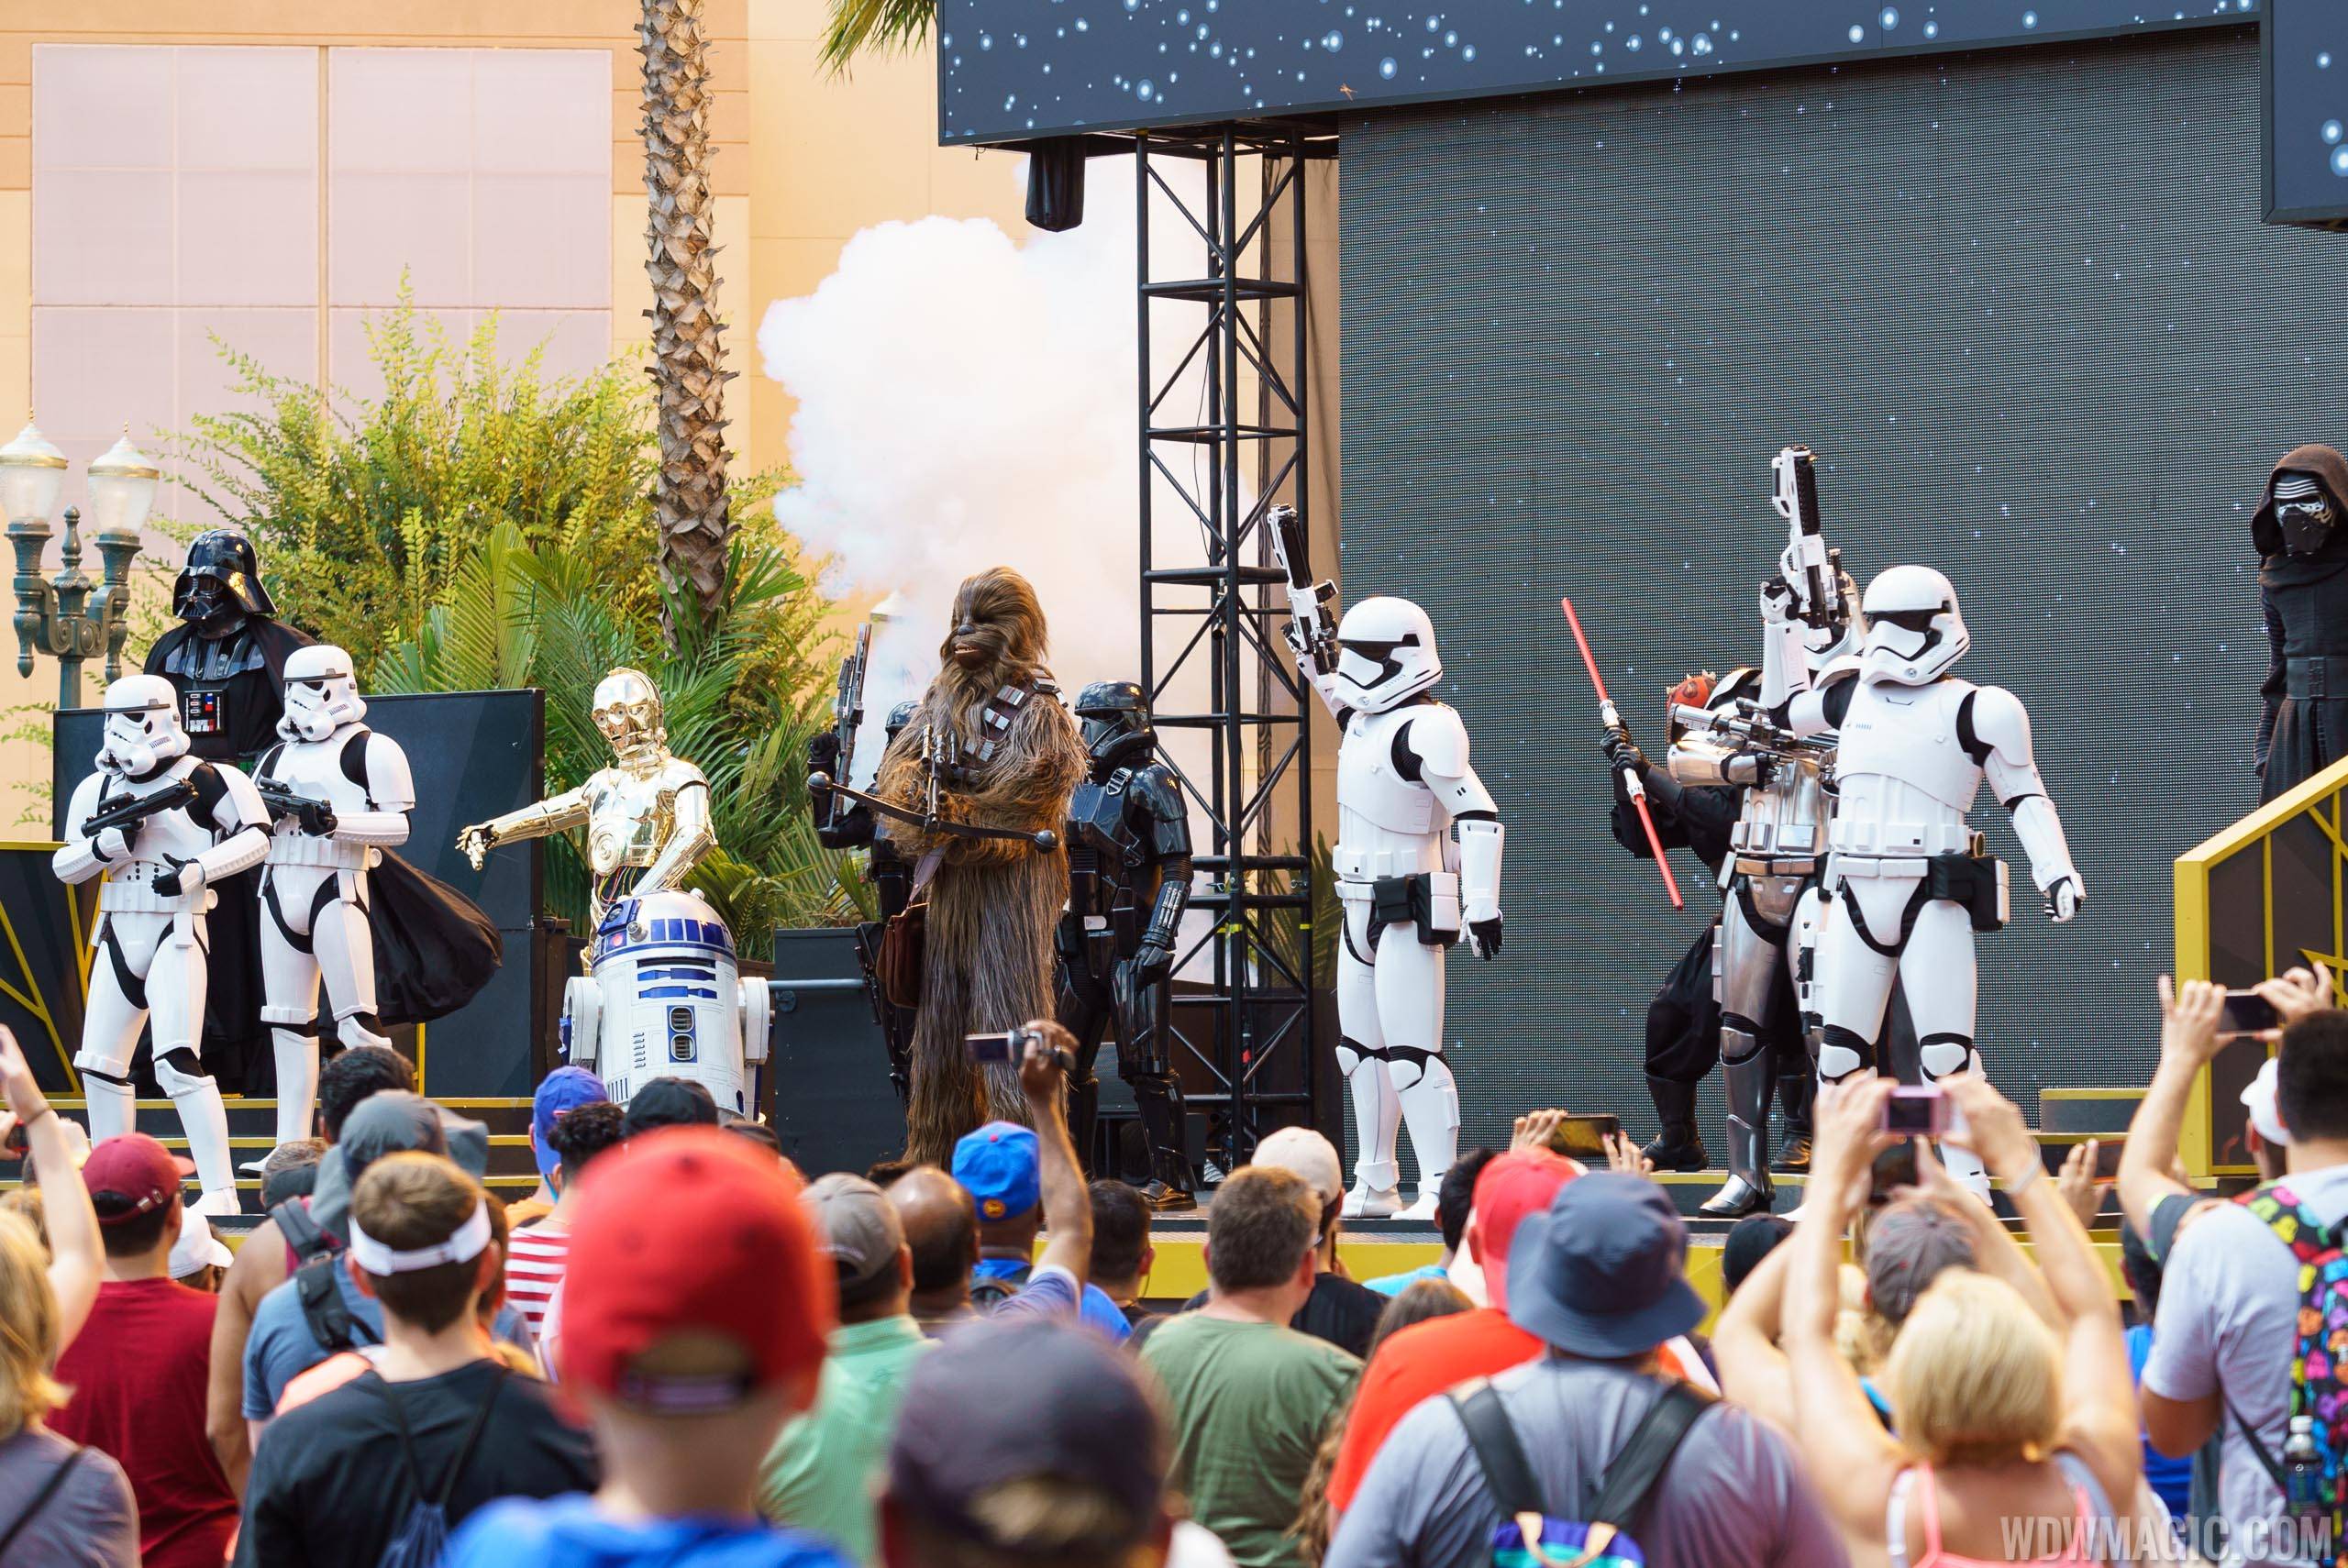 'Star Wars A Galaxy Far, Far Away' stage show closing for several weeks